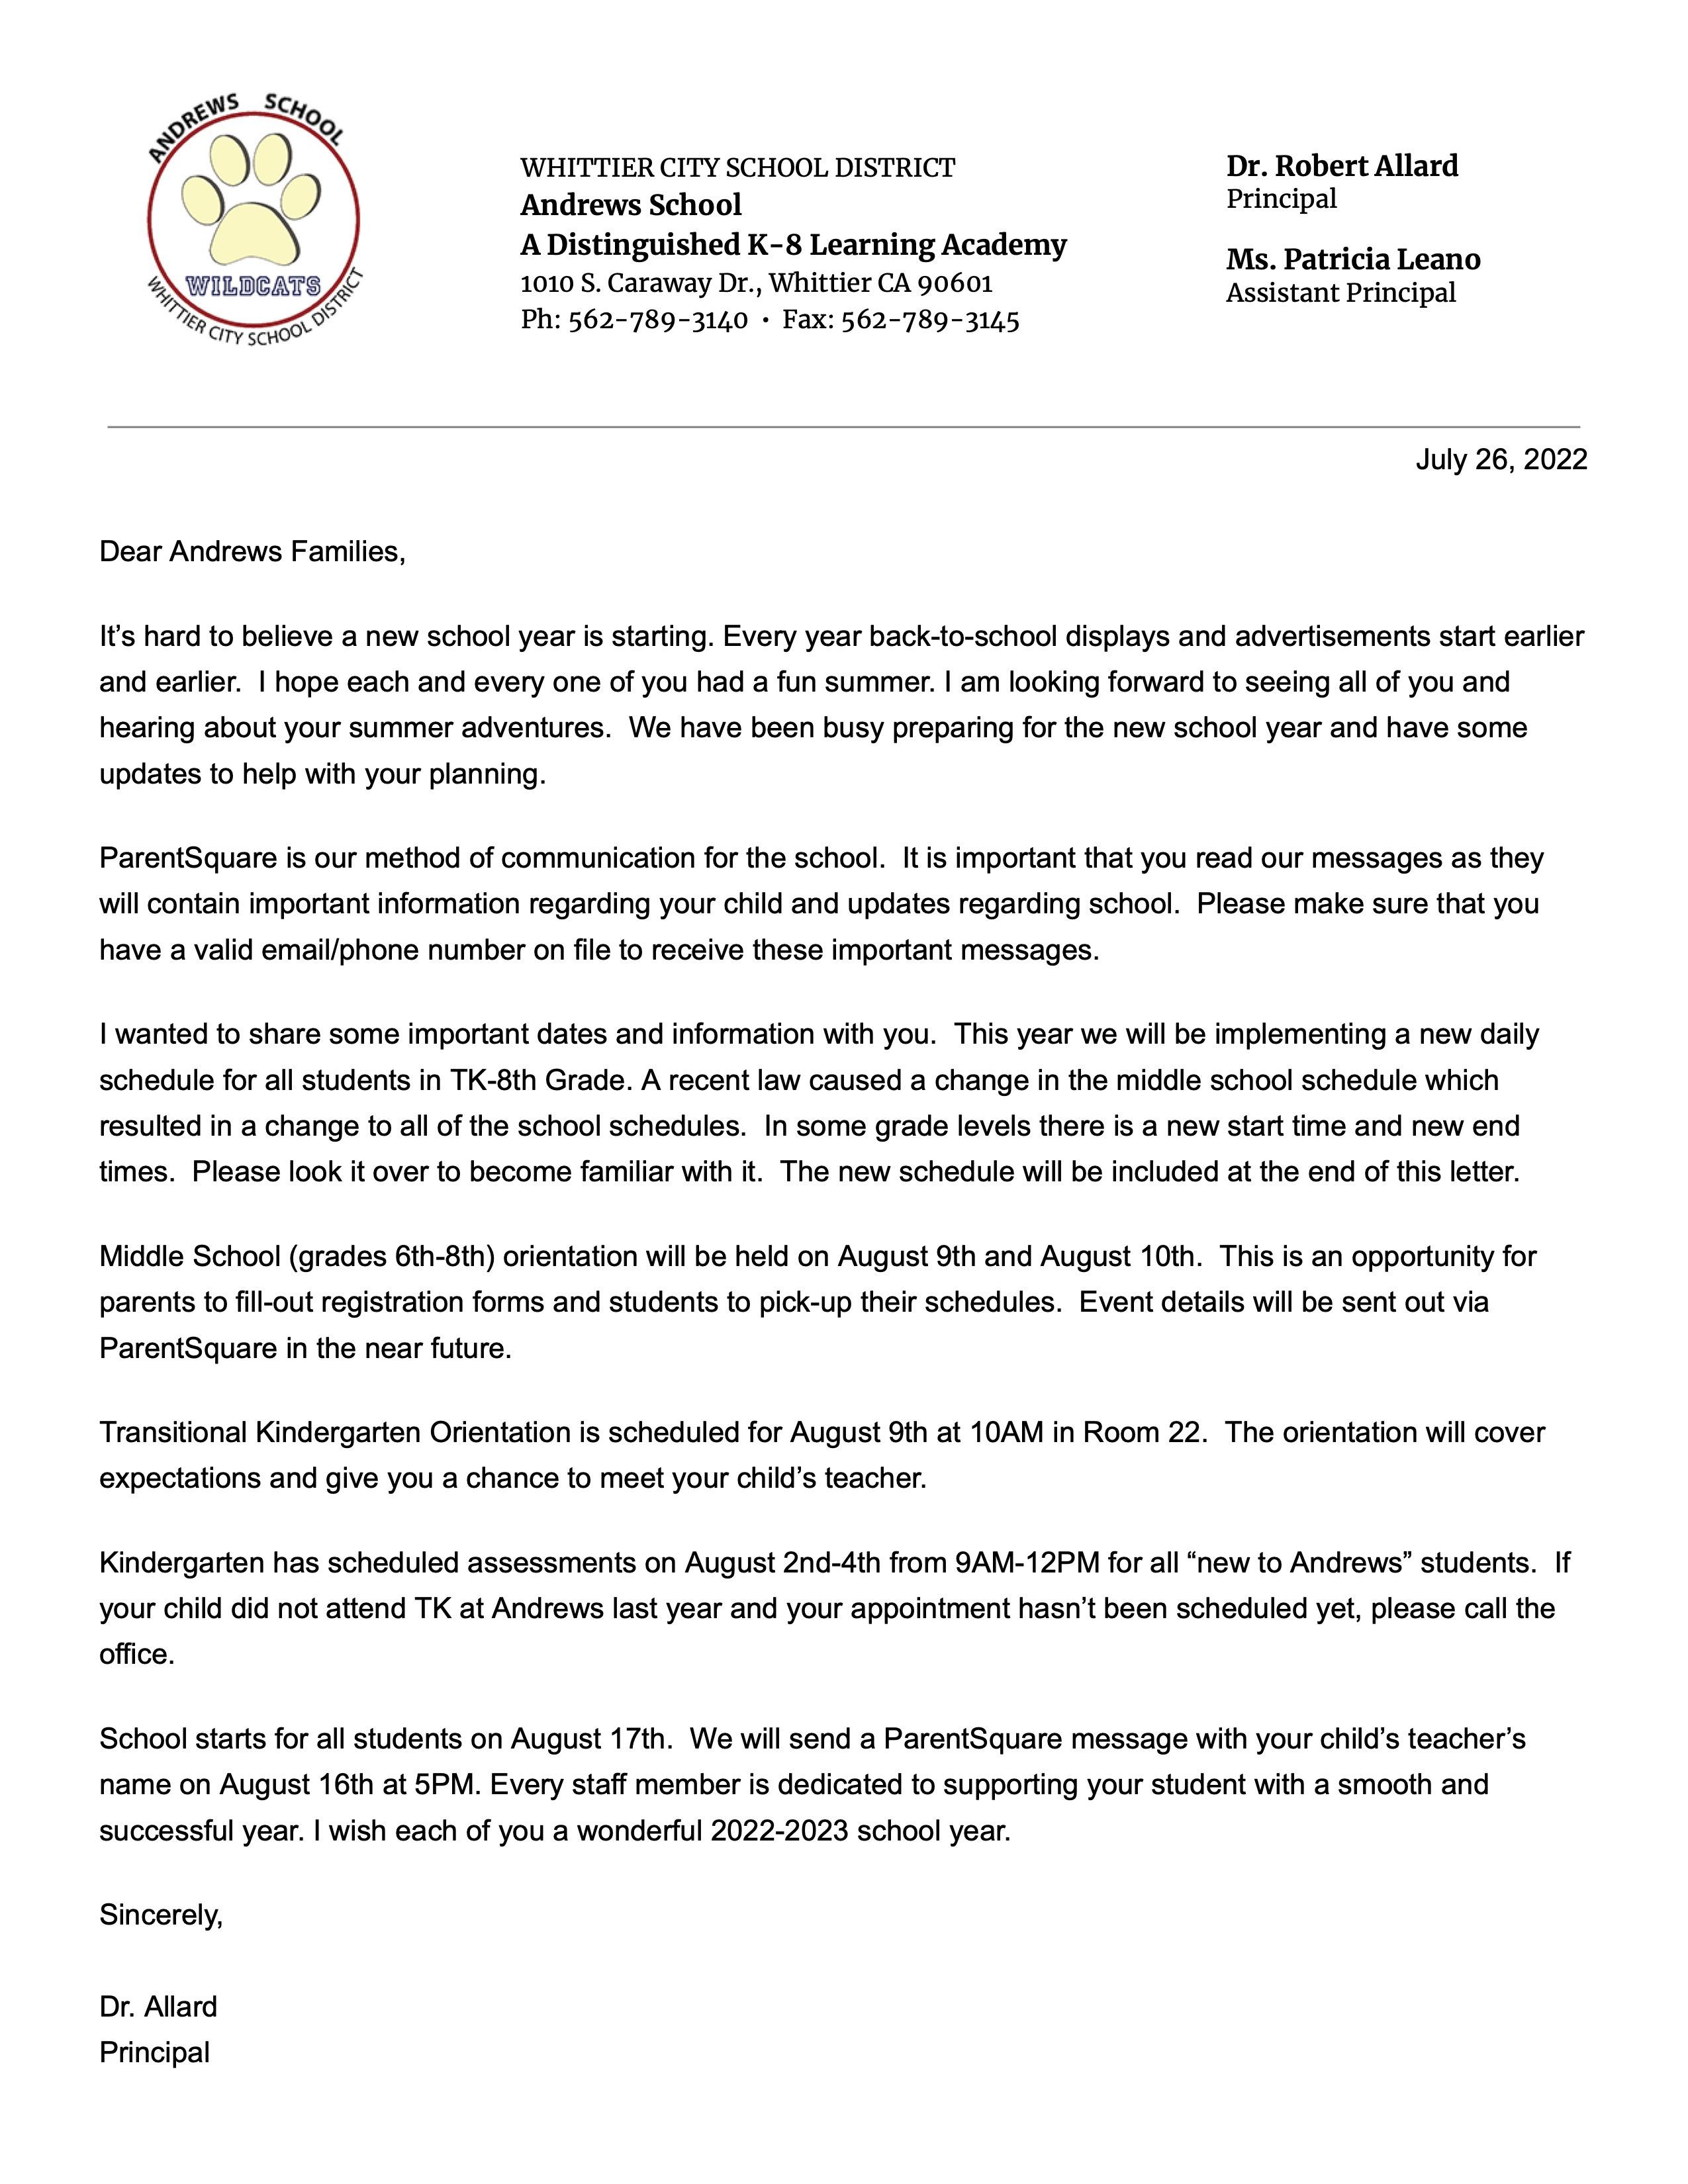 Principal's Message Letter